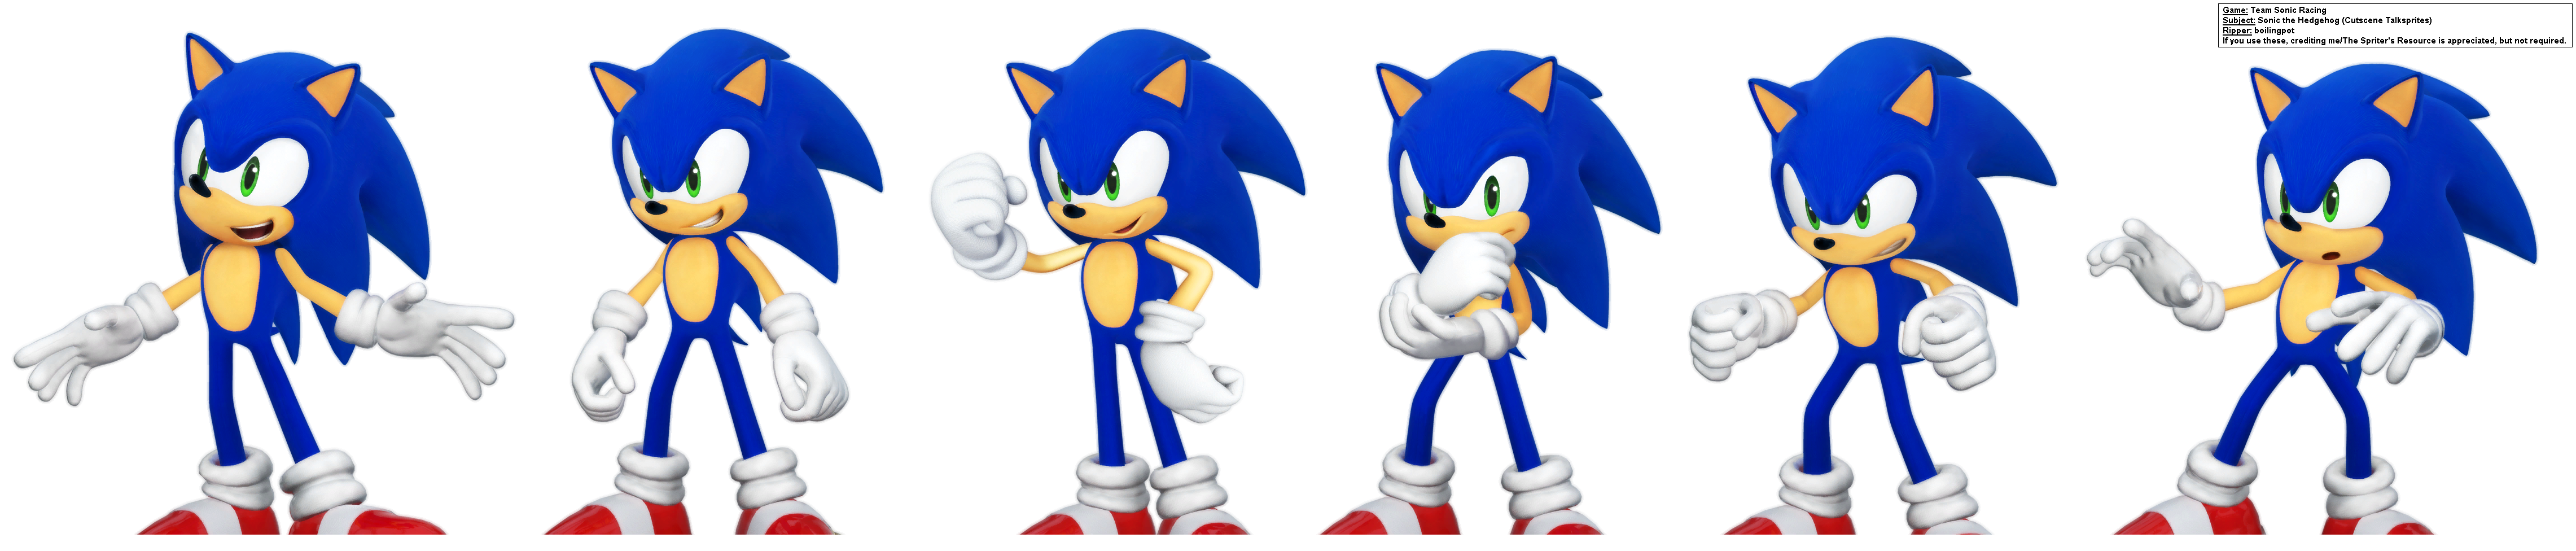 Team Sonic Racing - Sonic the Hedgehog